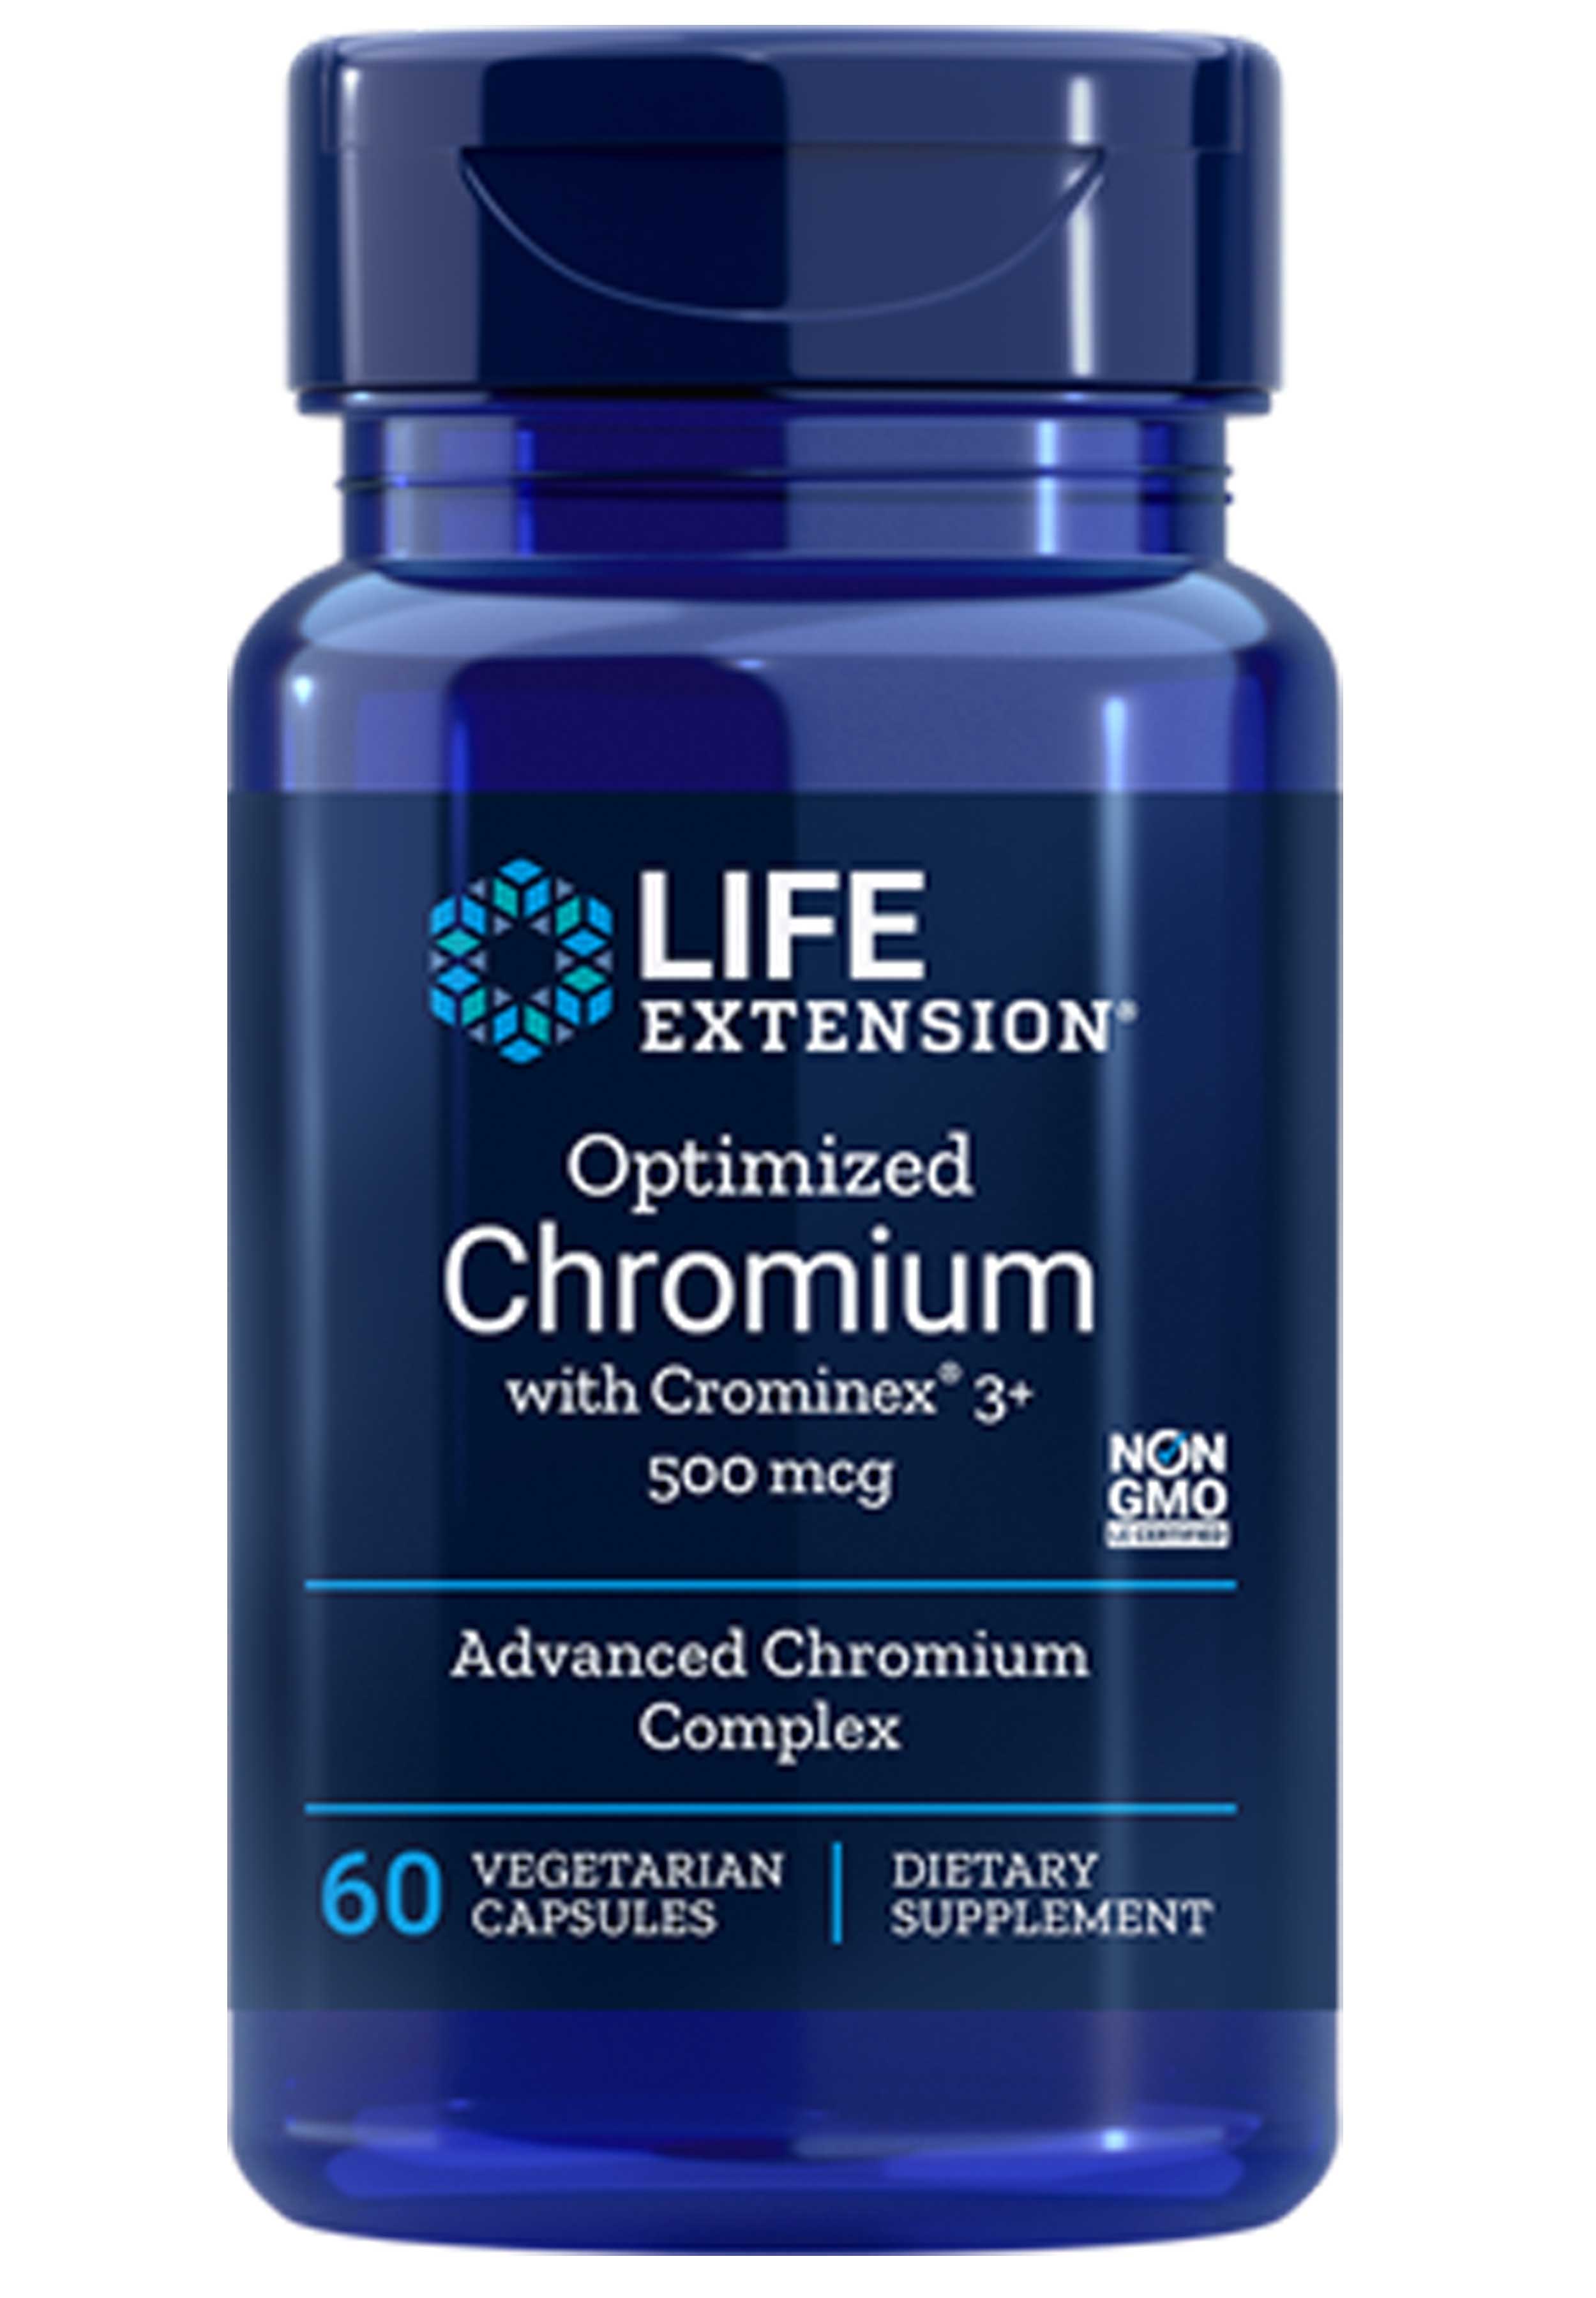 Life Extension Optimized Chromium with Crominex 3+